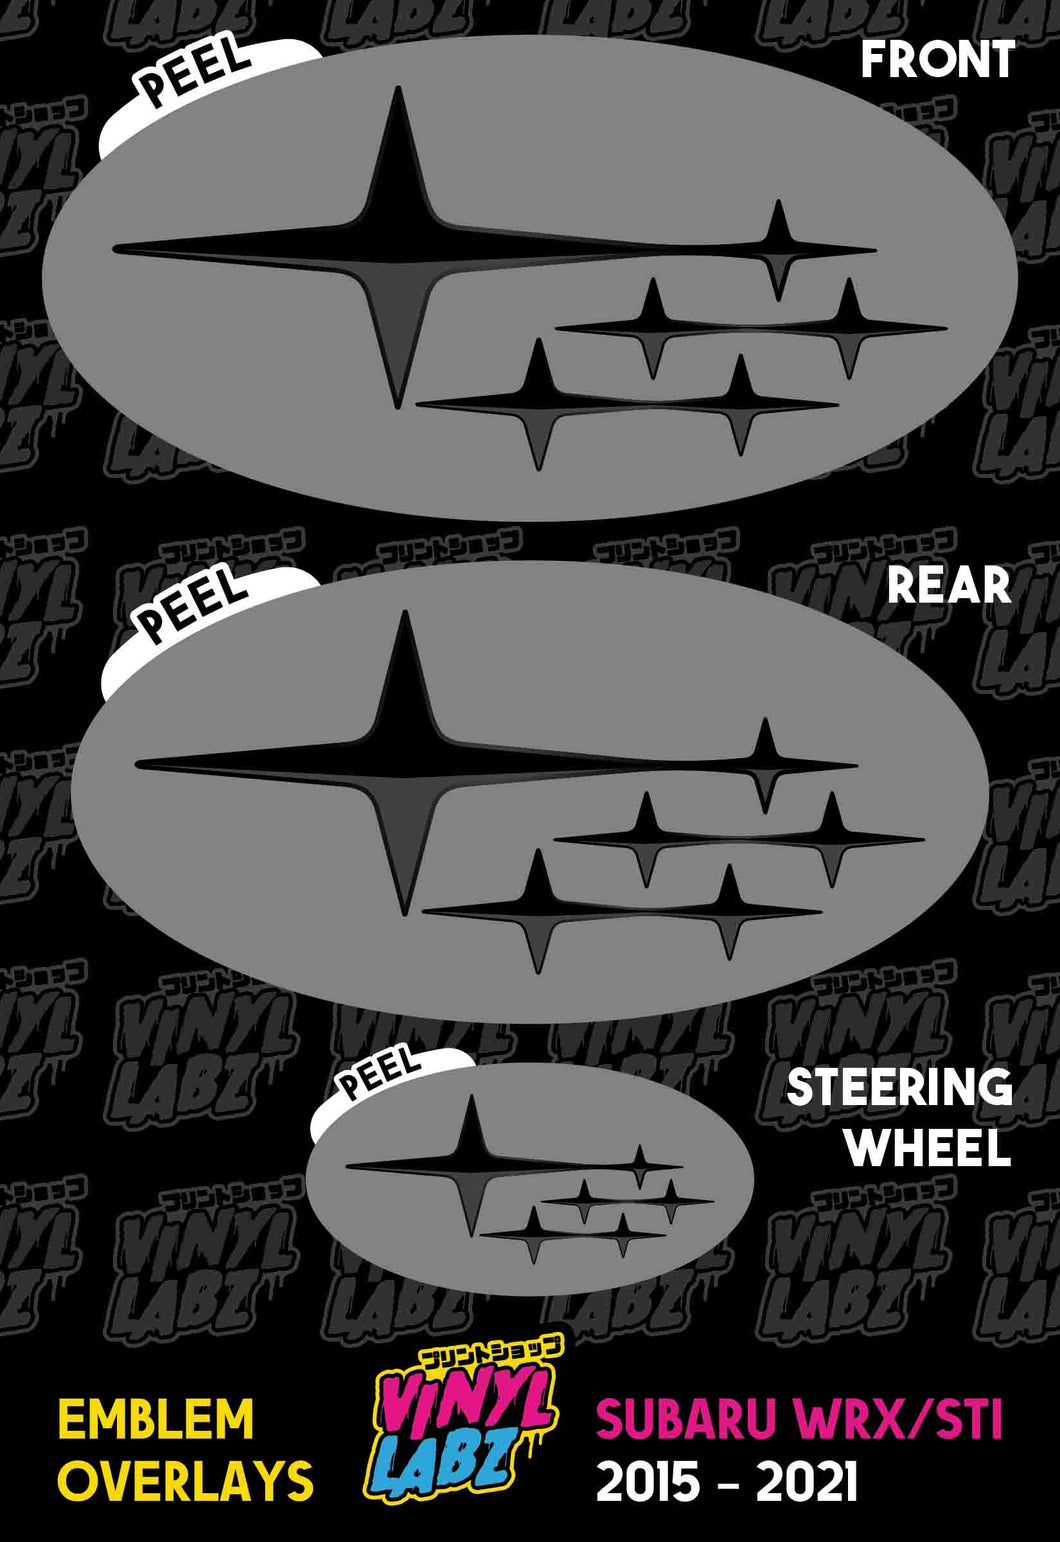 Subaru Vinyl Emblem Overlay (Grey and Black) | 2015-2021 Subaru WRX/STI